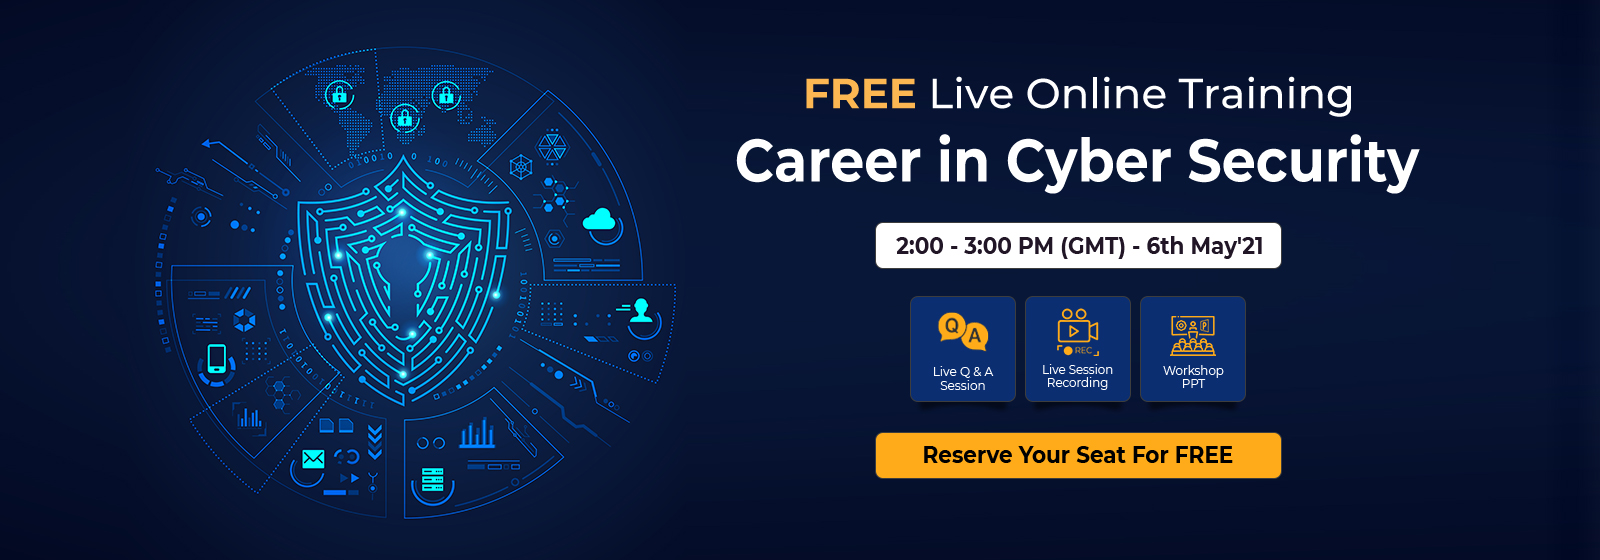 FREE Live Online Training - Career In Cyber Security, Mumbai, Maharashtra, India